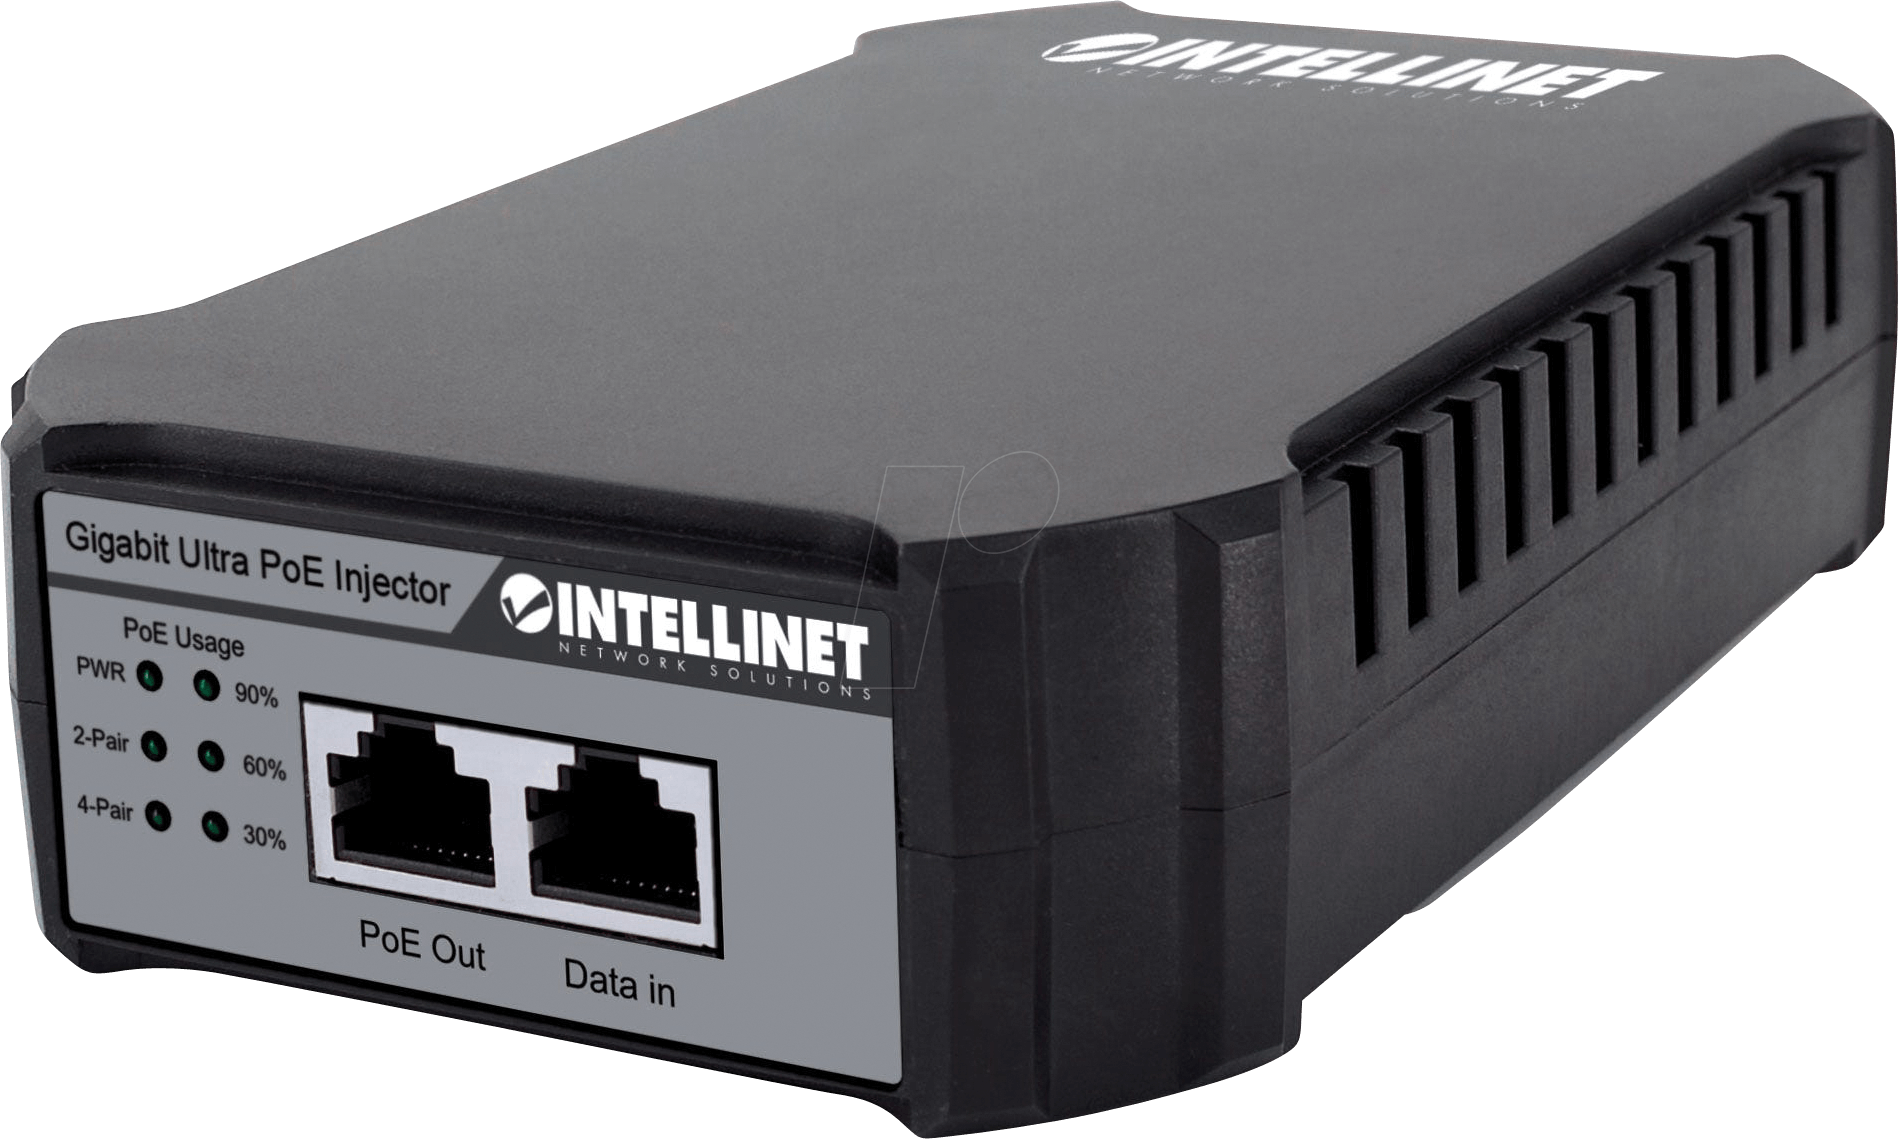 INT 561495 - Power over Ethernet (PoE++) Gigabit Injektor von Intellinet